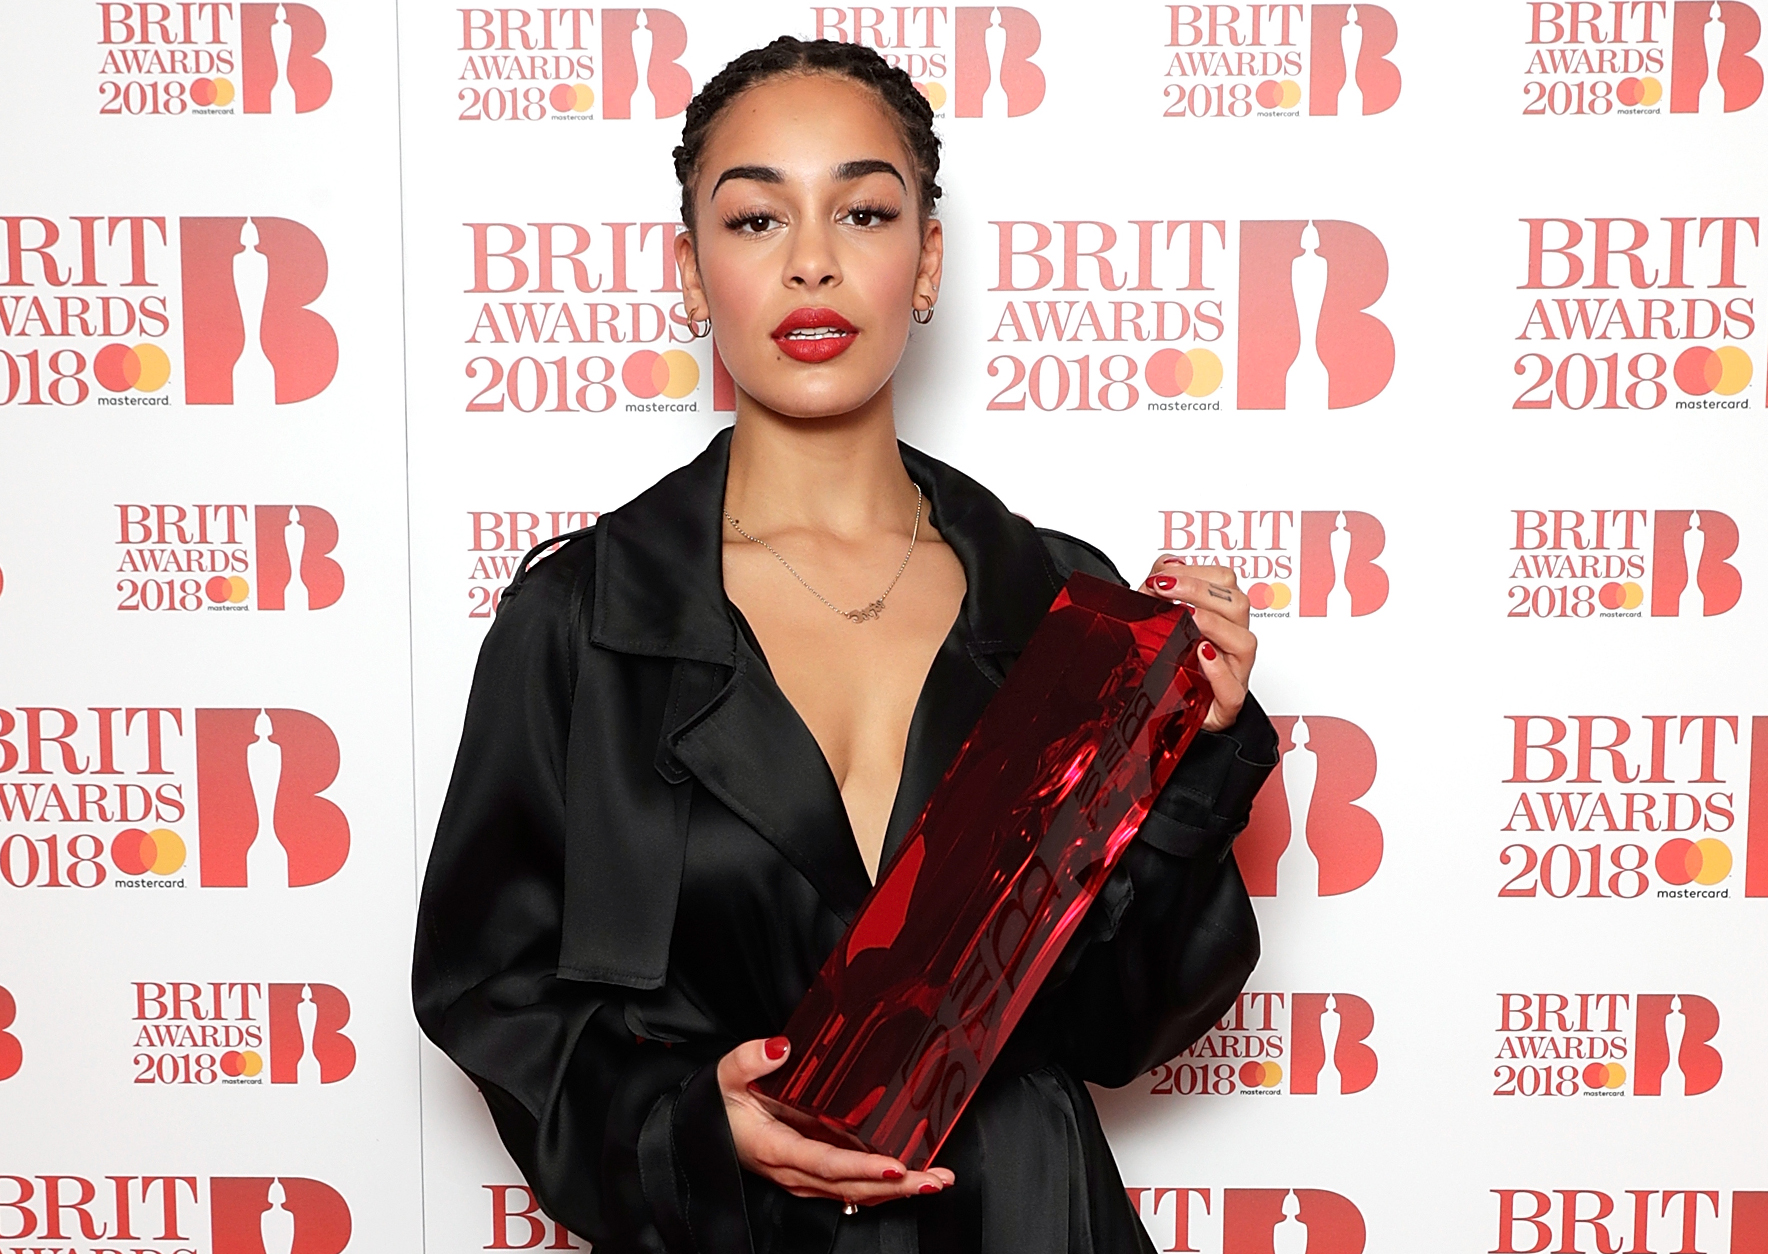 Jorja smith attends the brit awards 2018